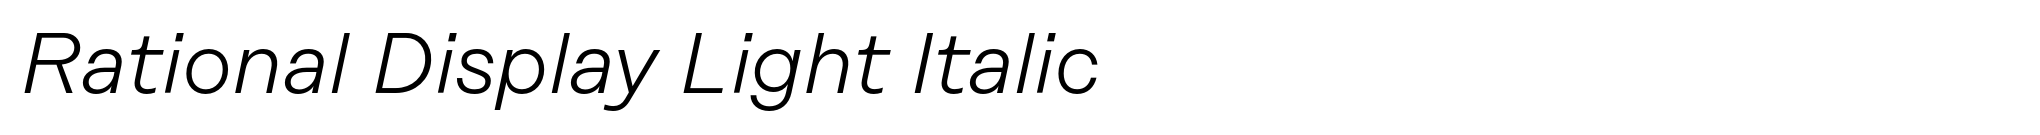 Rational Display Light Italic image